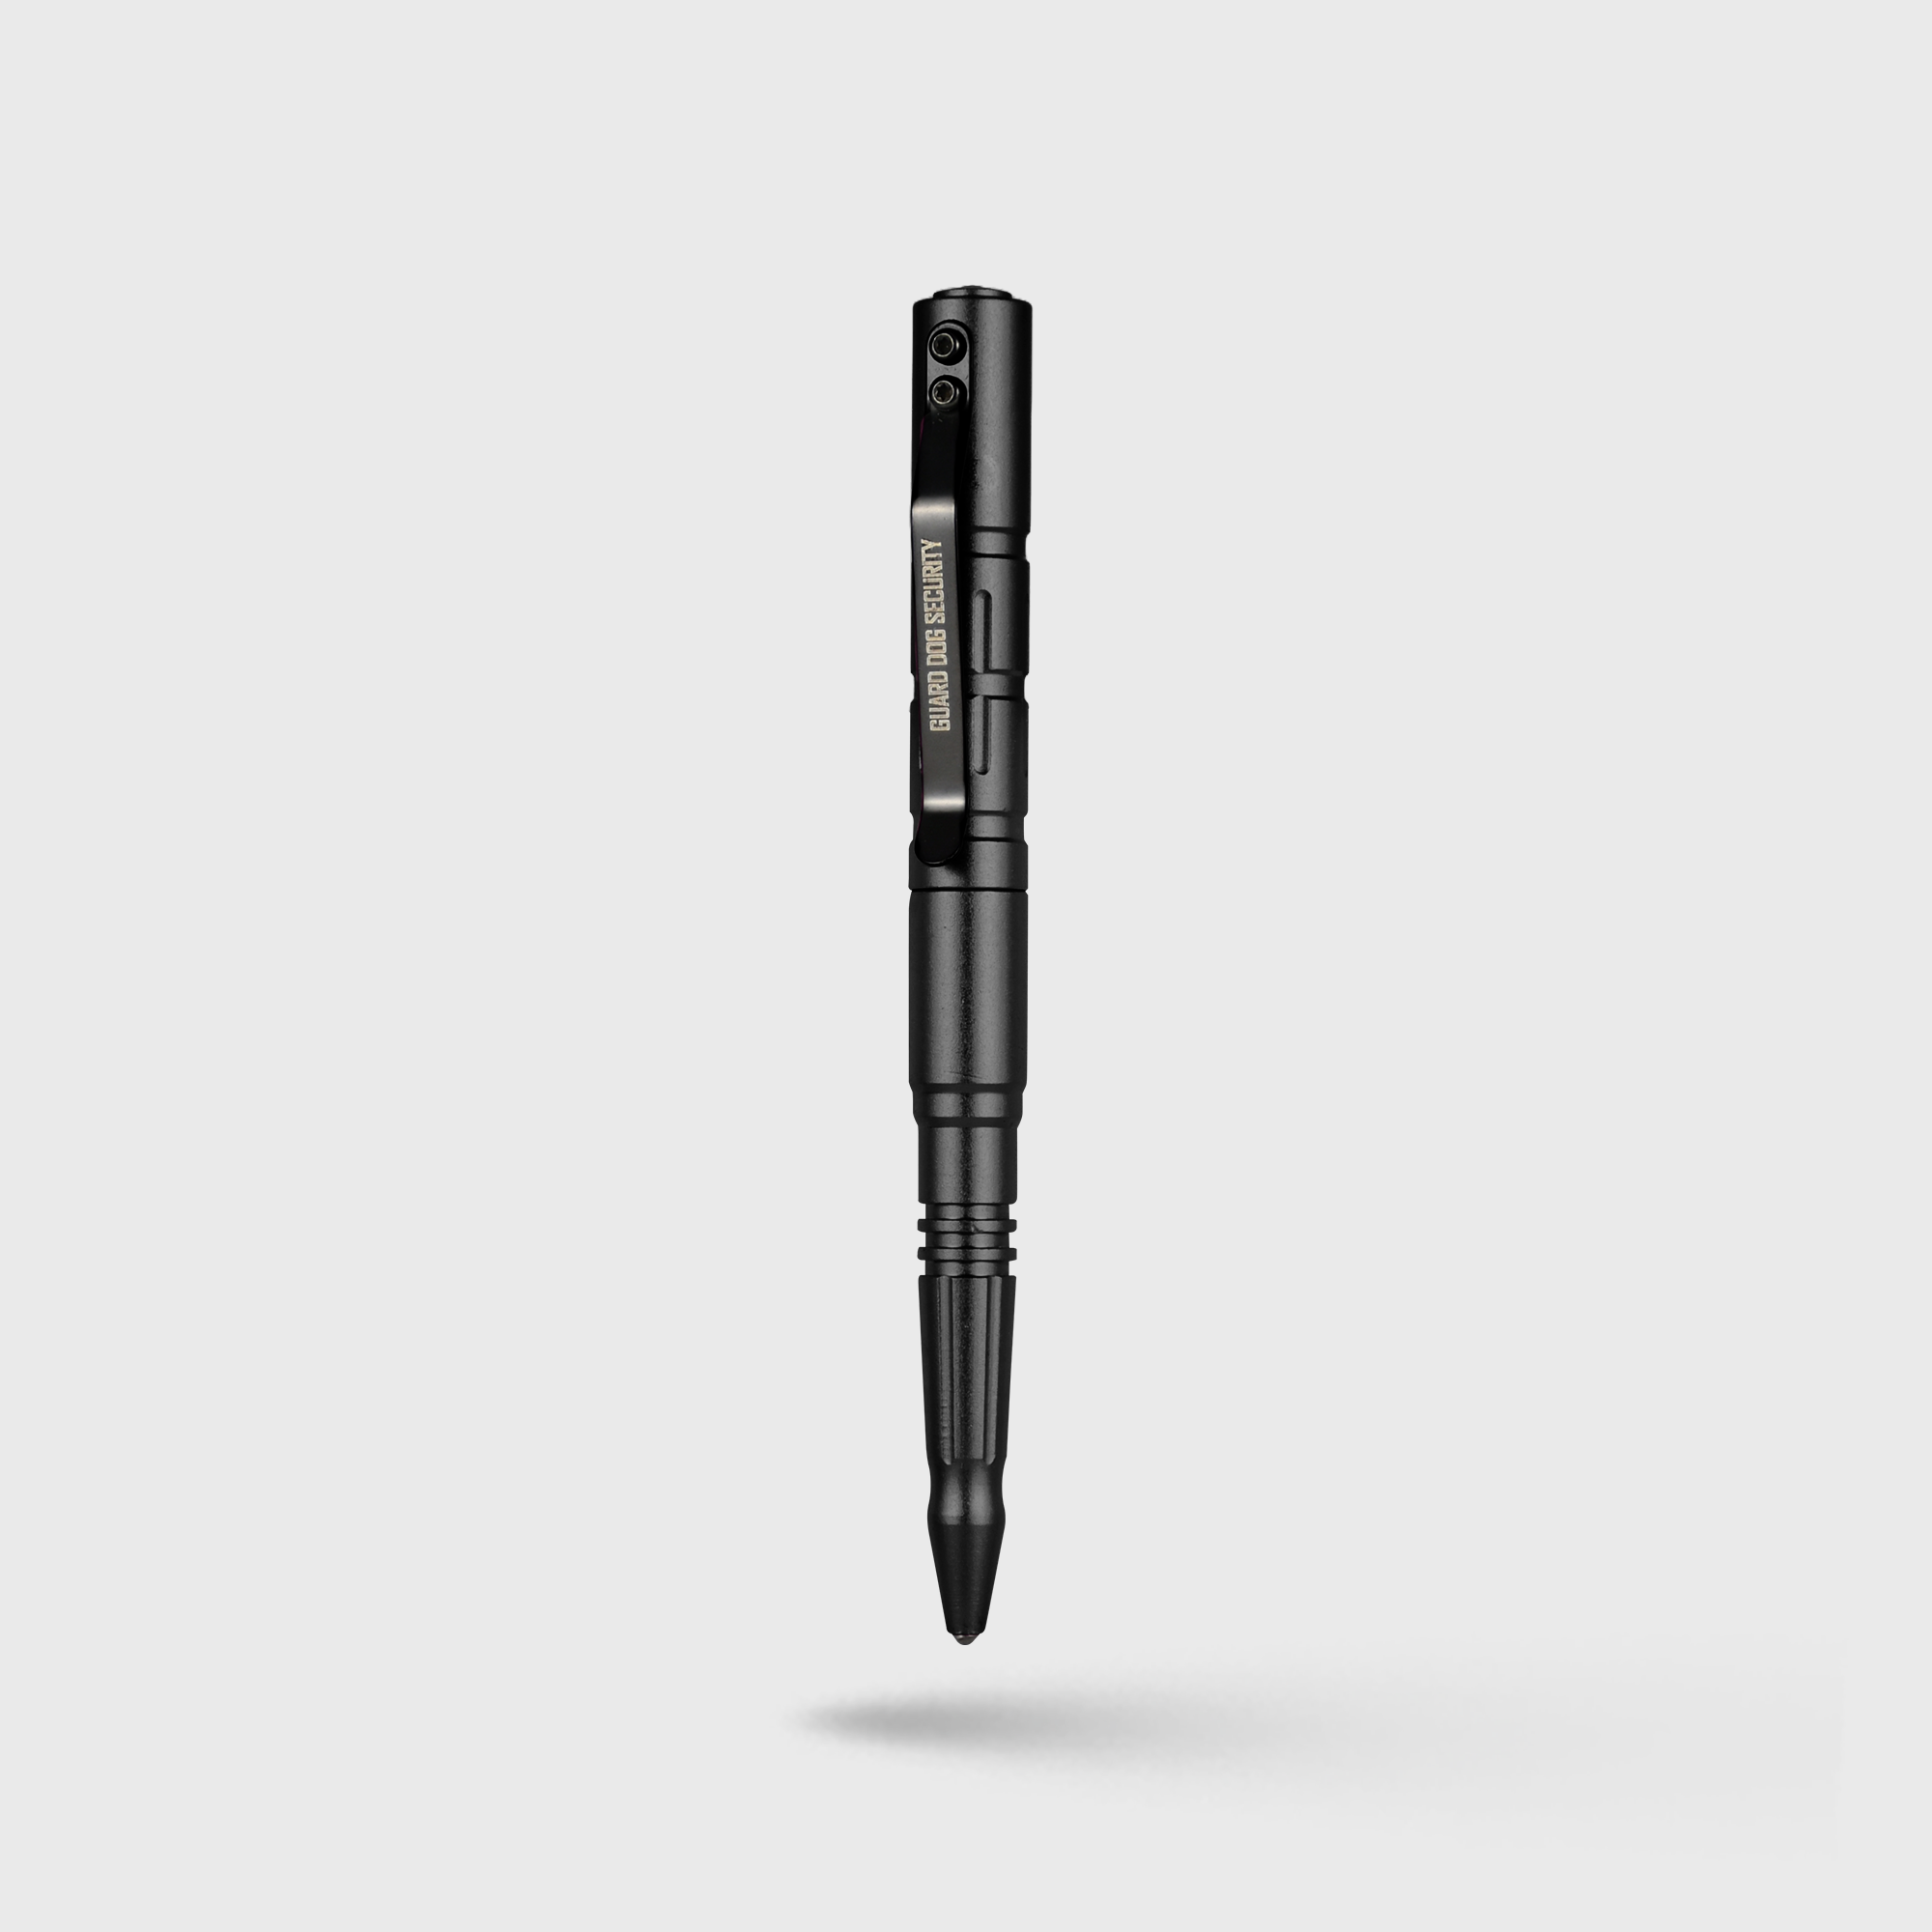 Buy Tactical Pen online, Aluminum Alloy w/ Glass Breaker